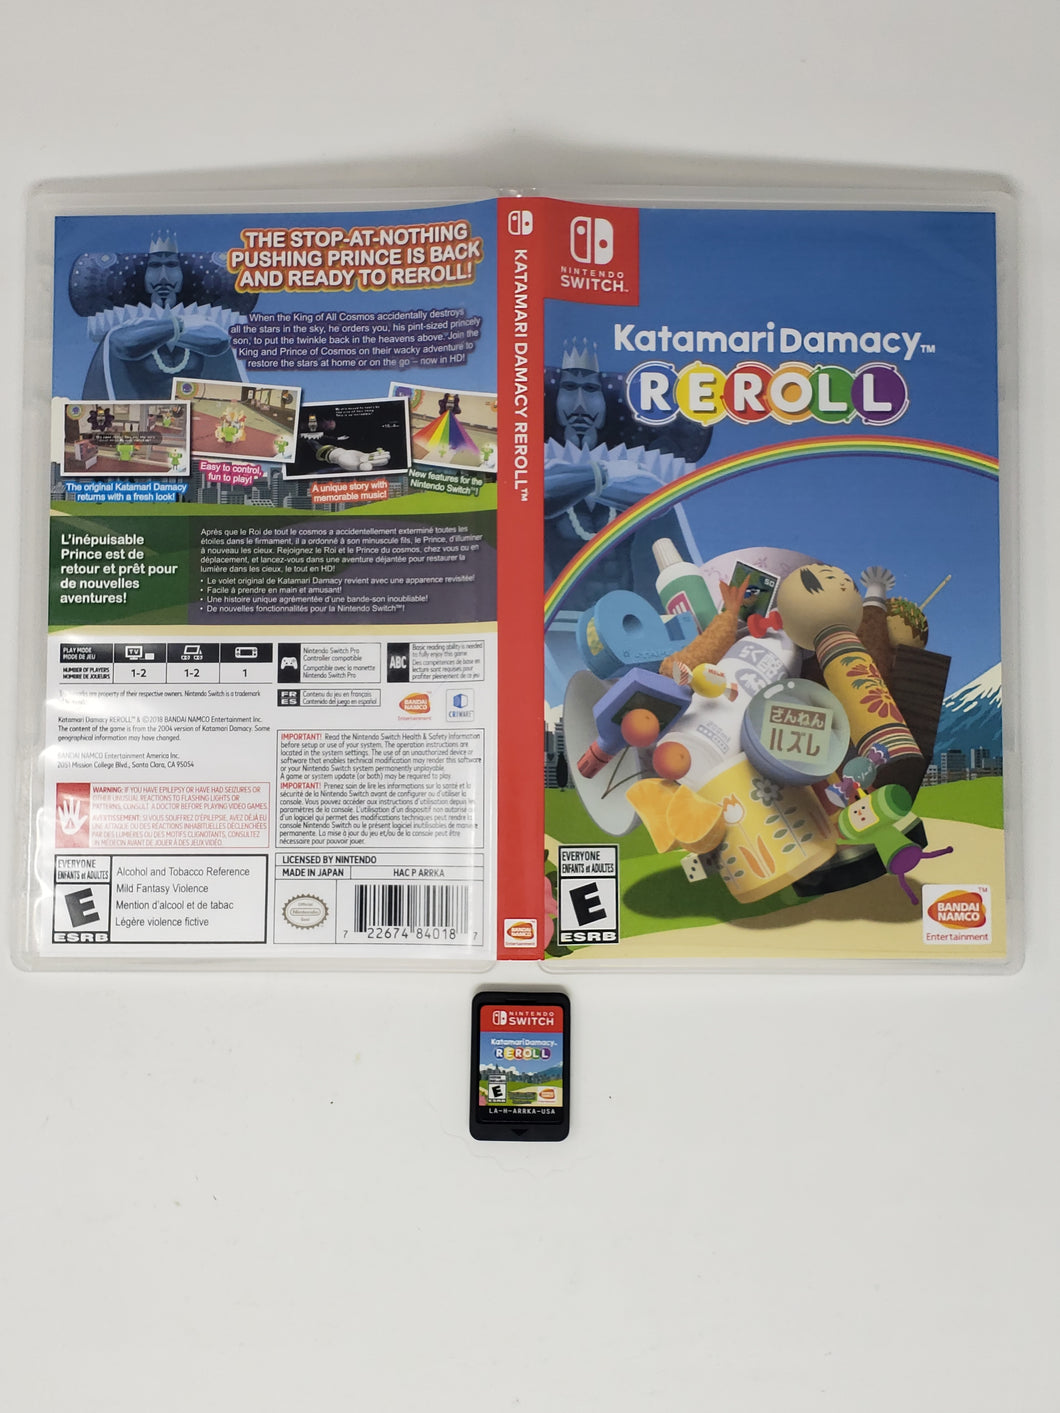 Katamari Damacy Reroll - Nintendo Switch